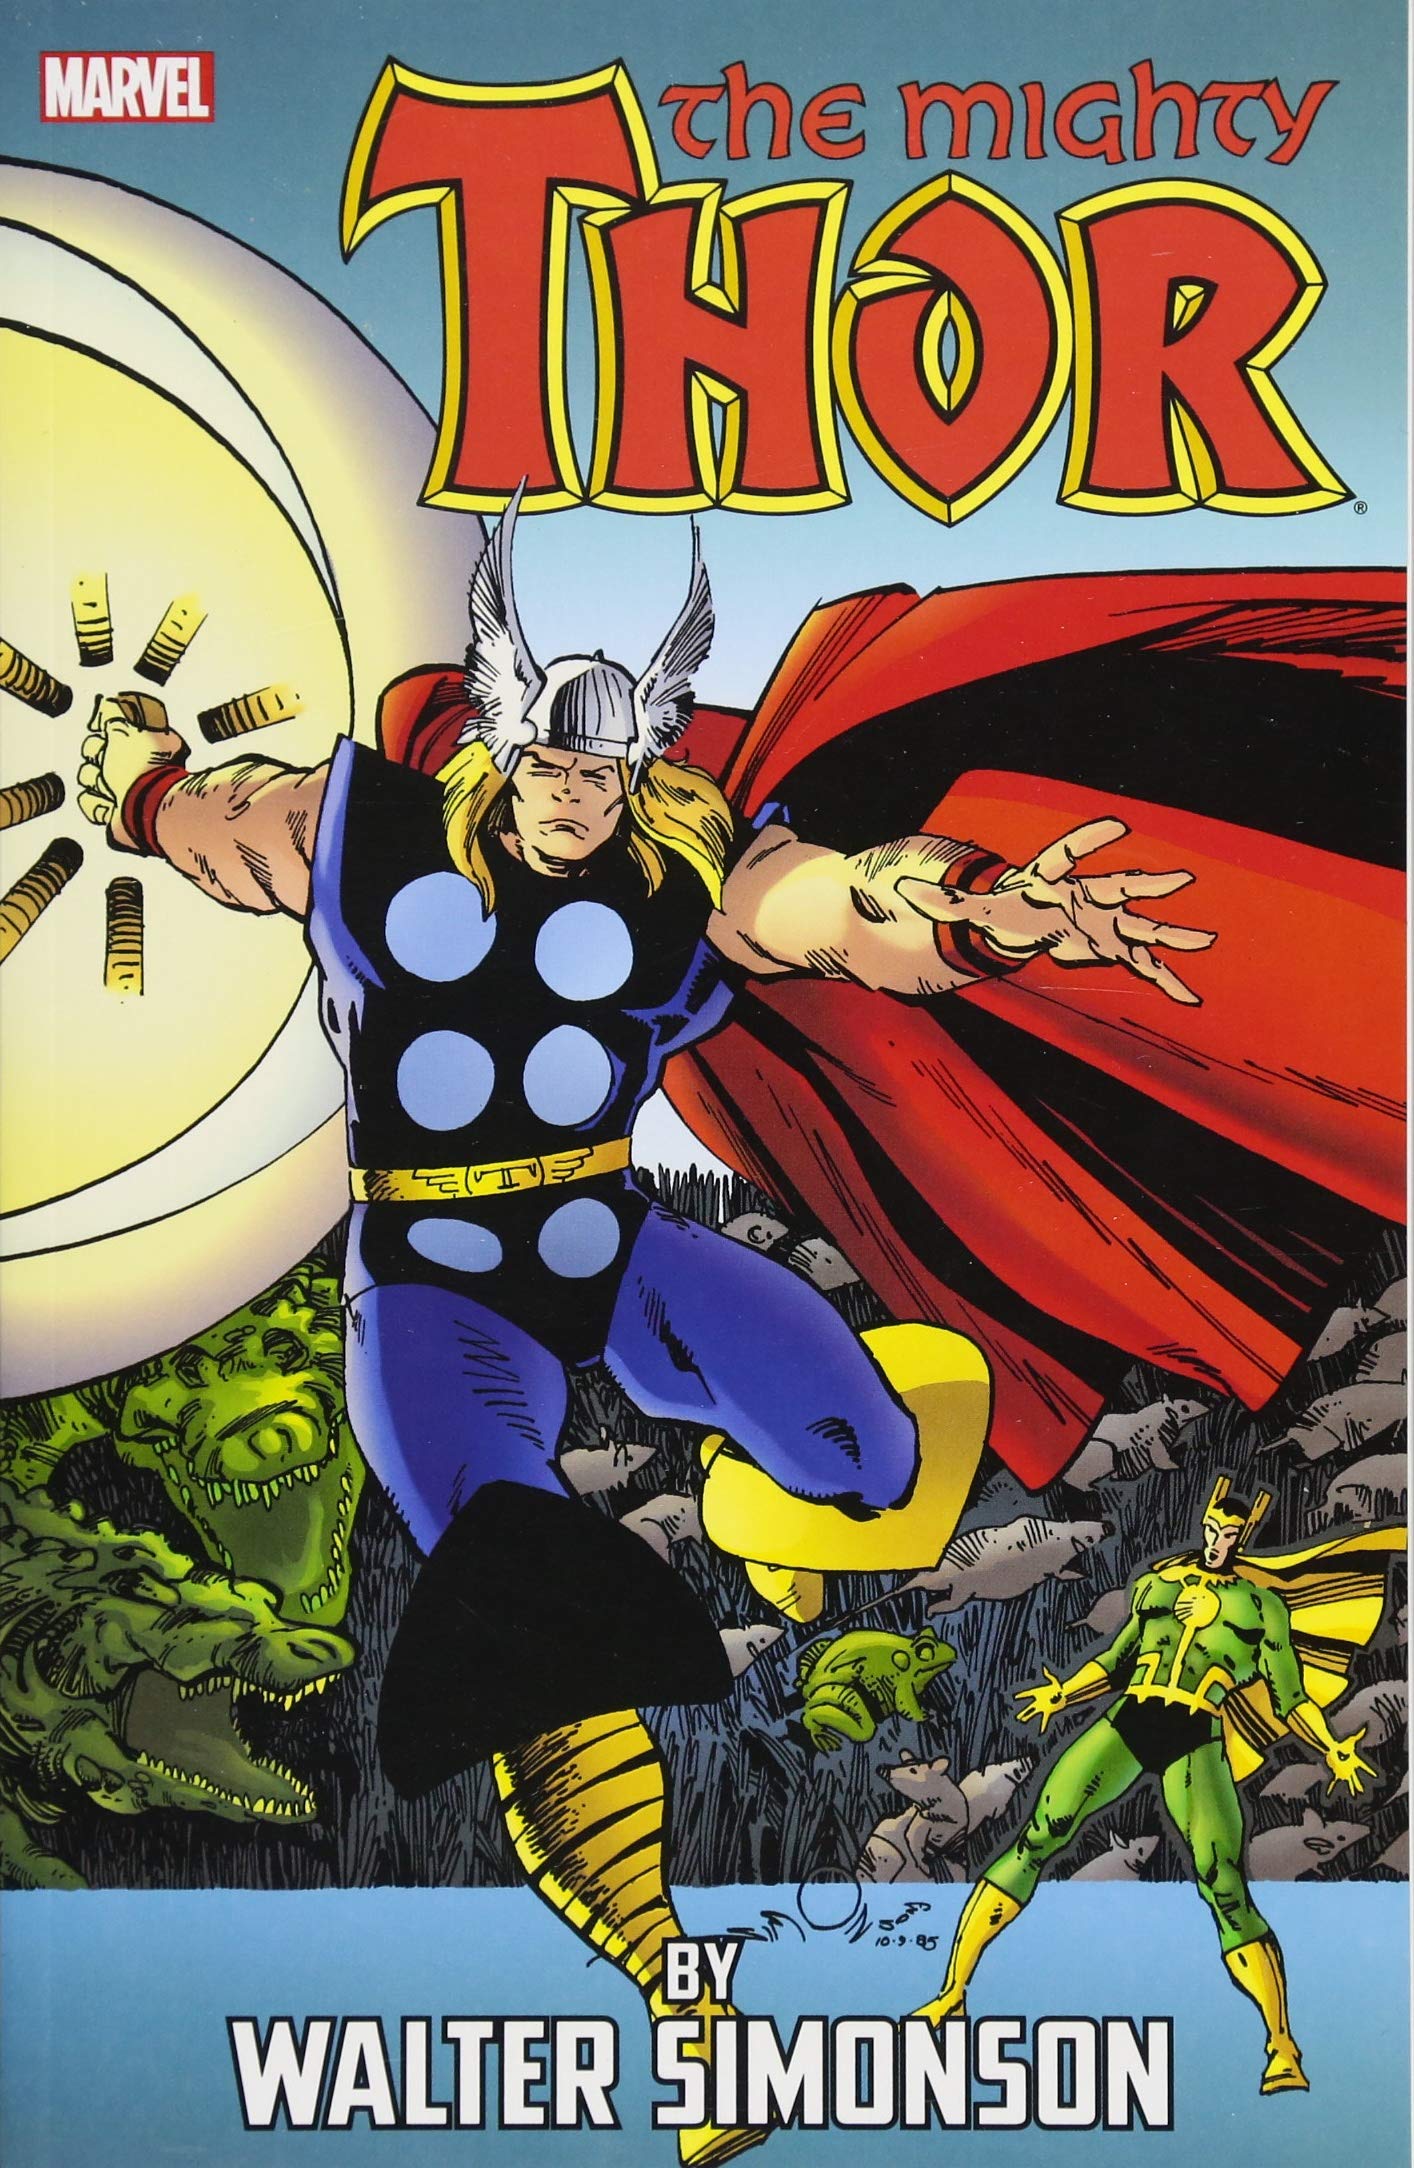 Thor by Walt Simonson Vol. 4 (Mighty Thor)